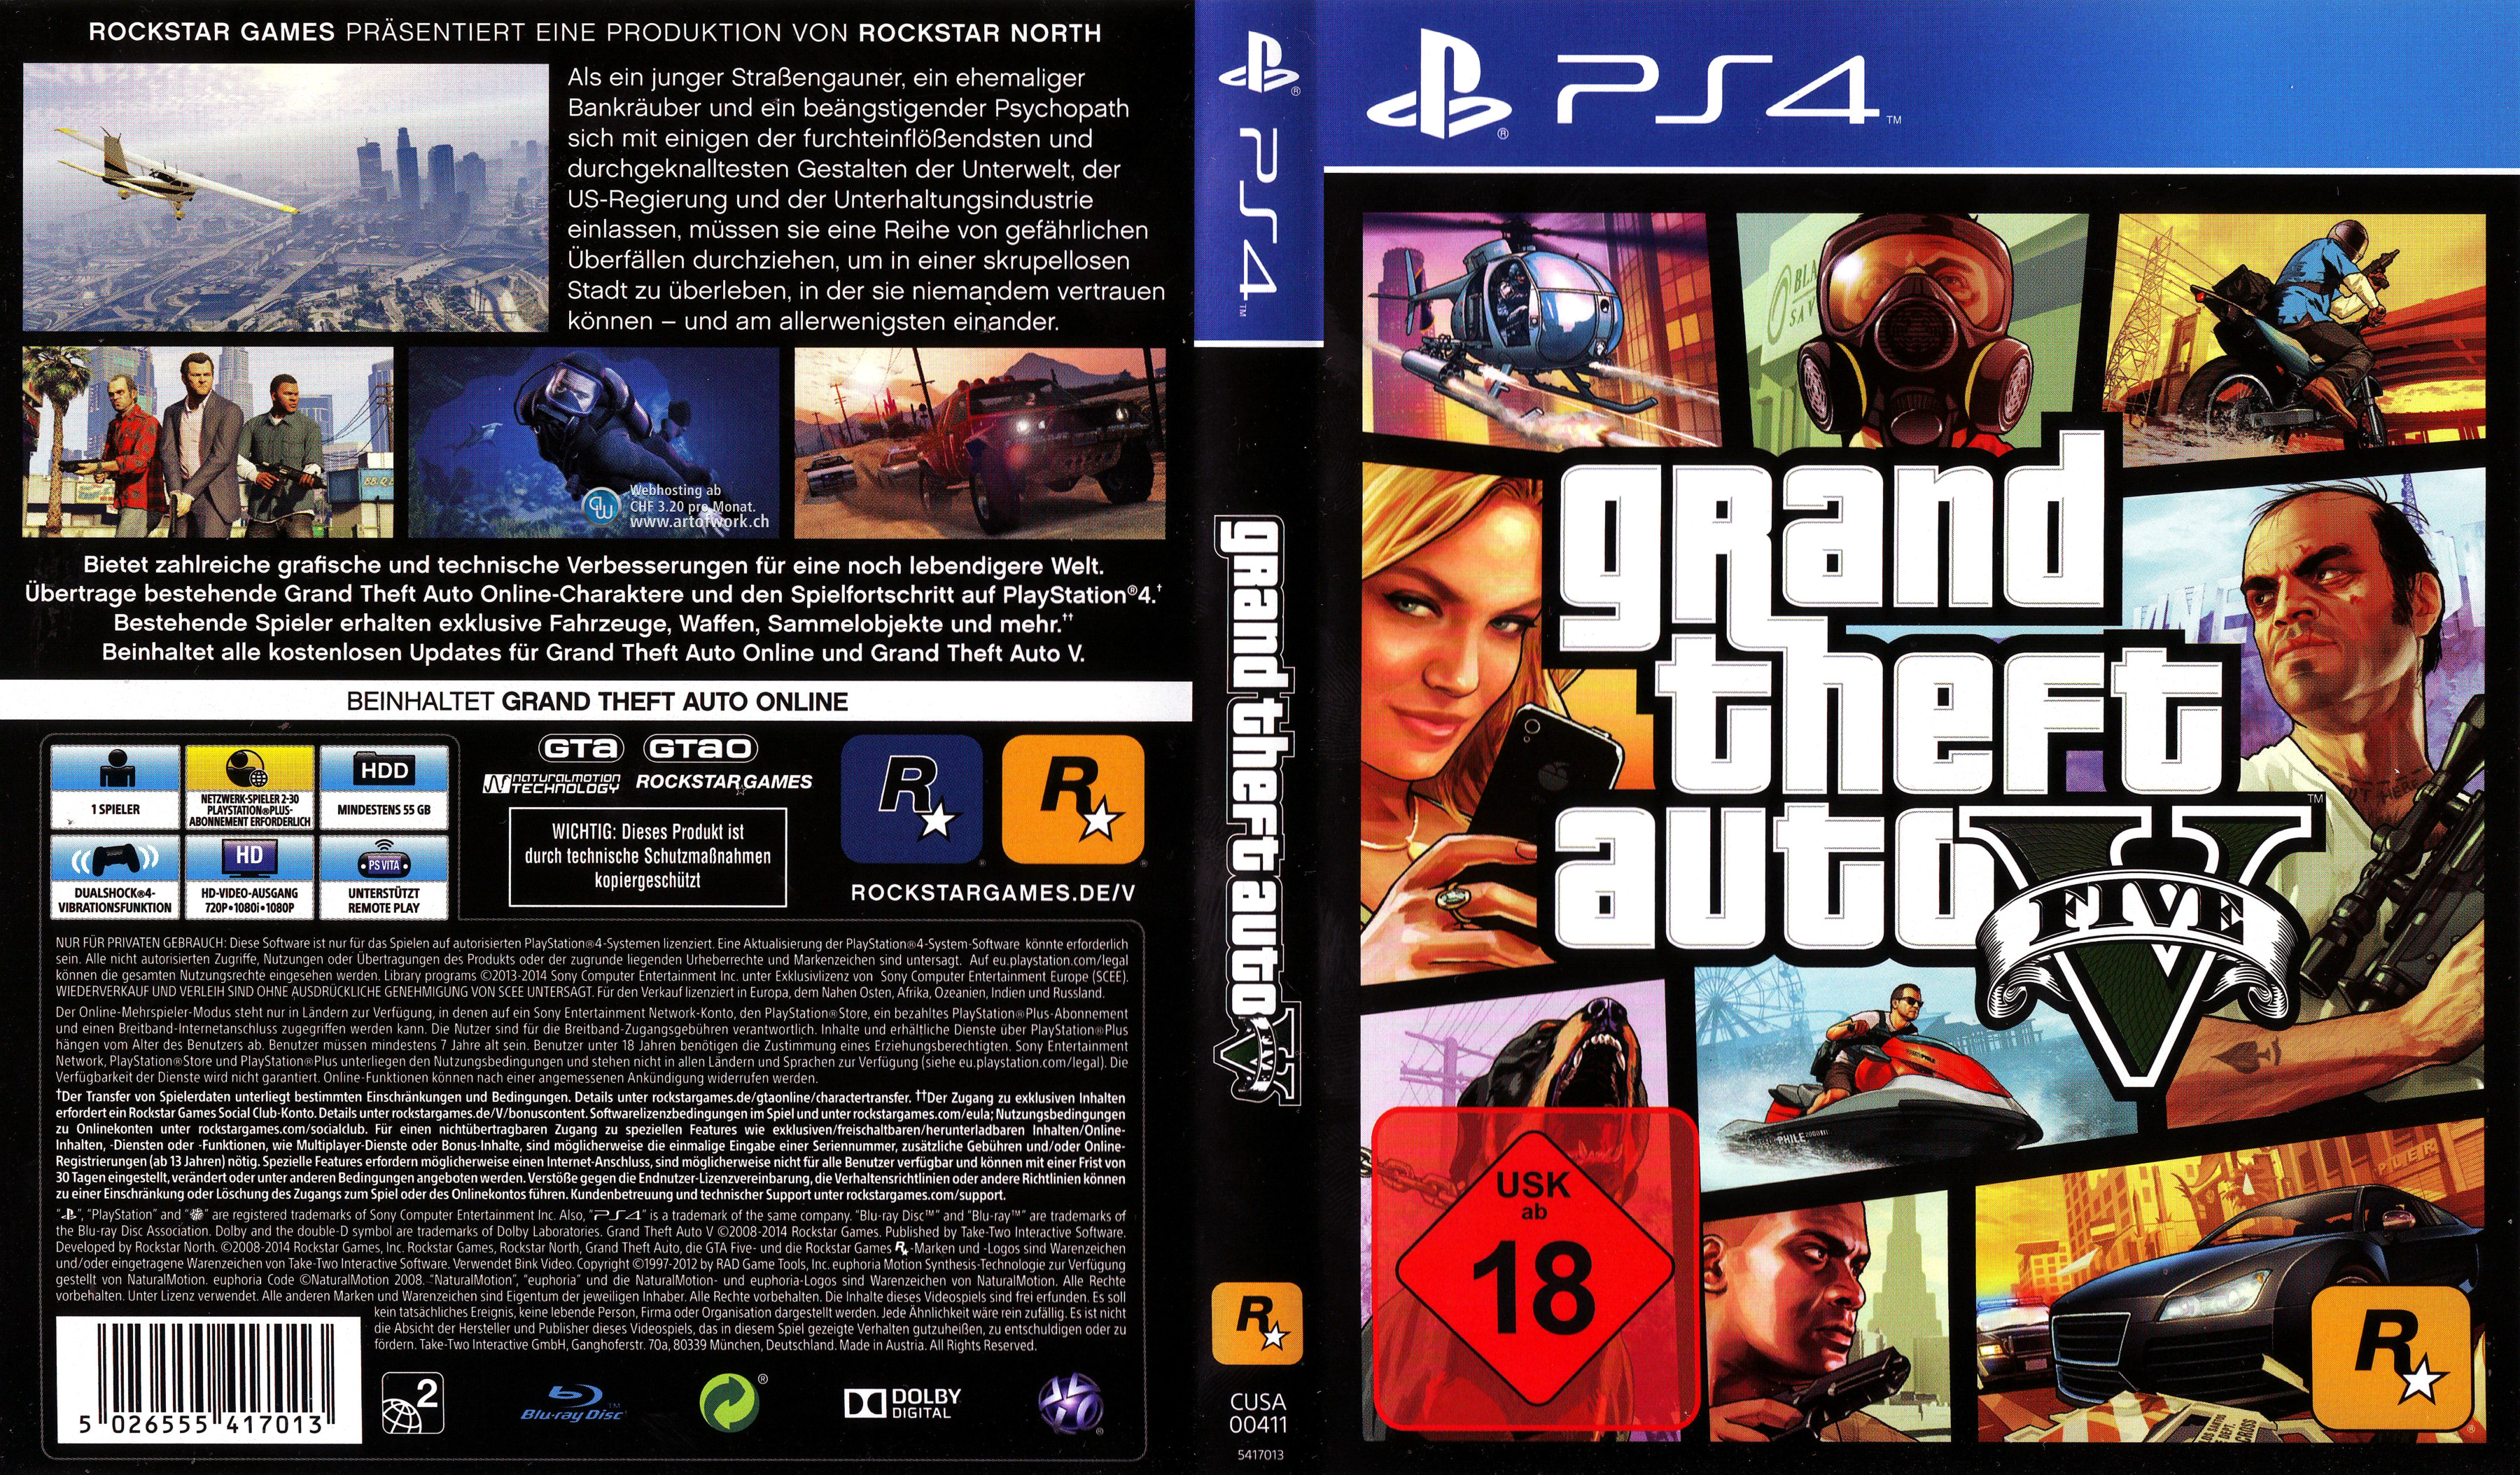 Grand Theft Auto V Playstation 4